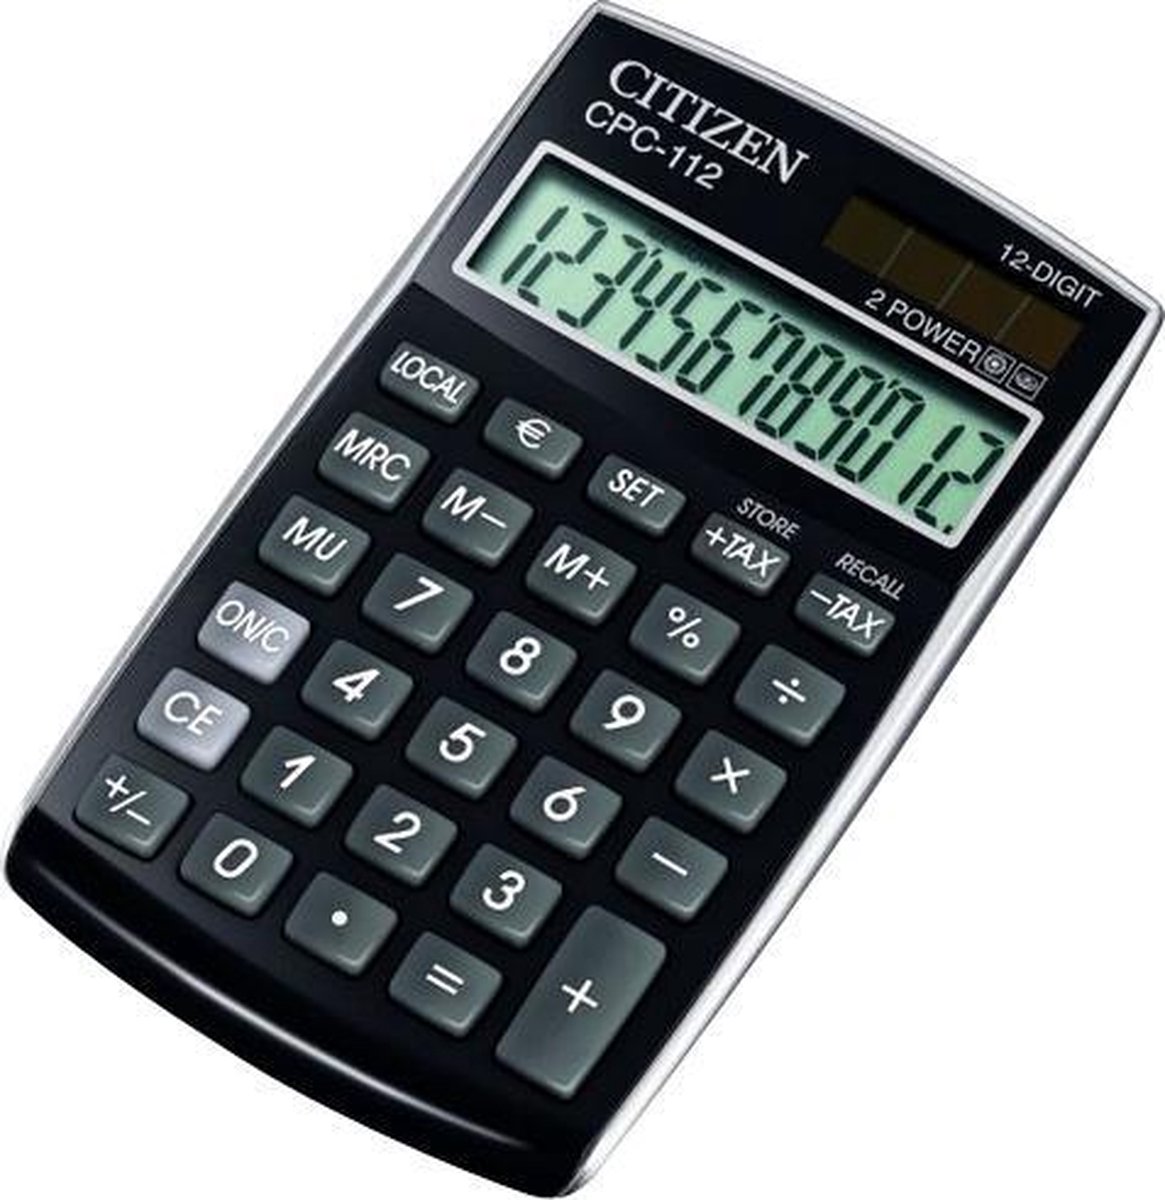 Calculator Desktop Citizen CPC 112BKWB